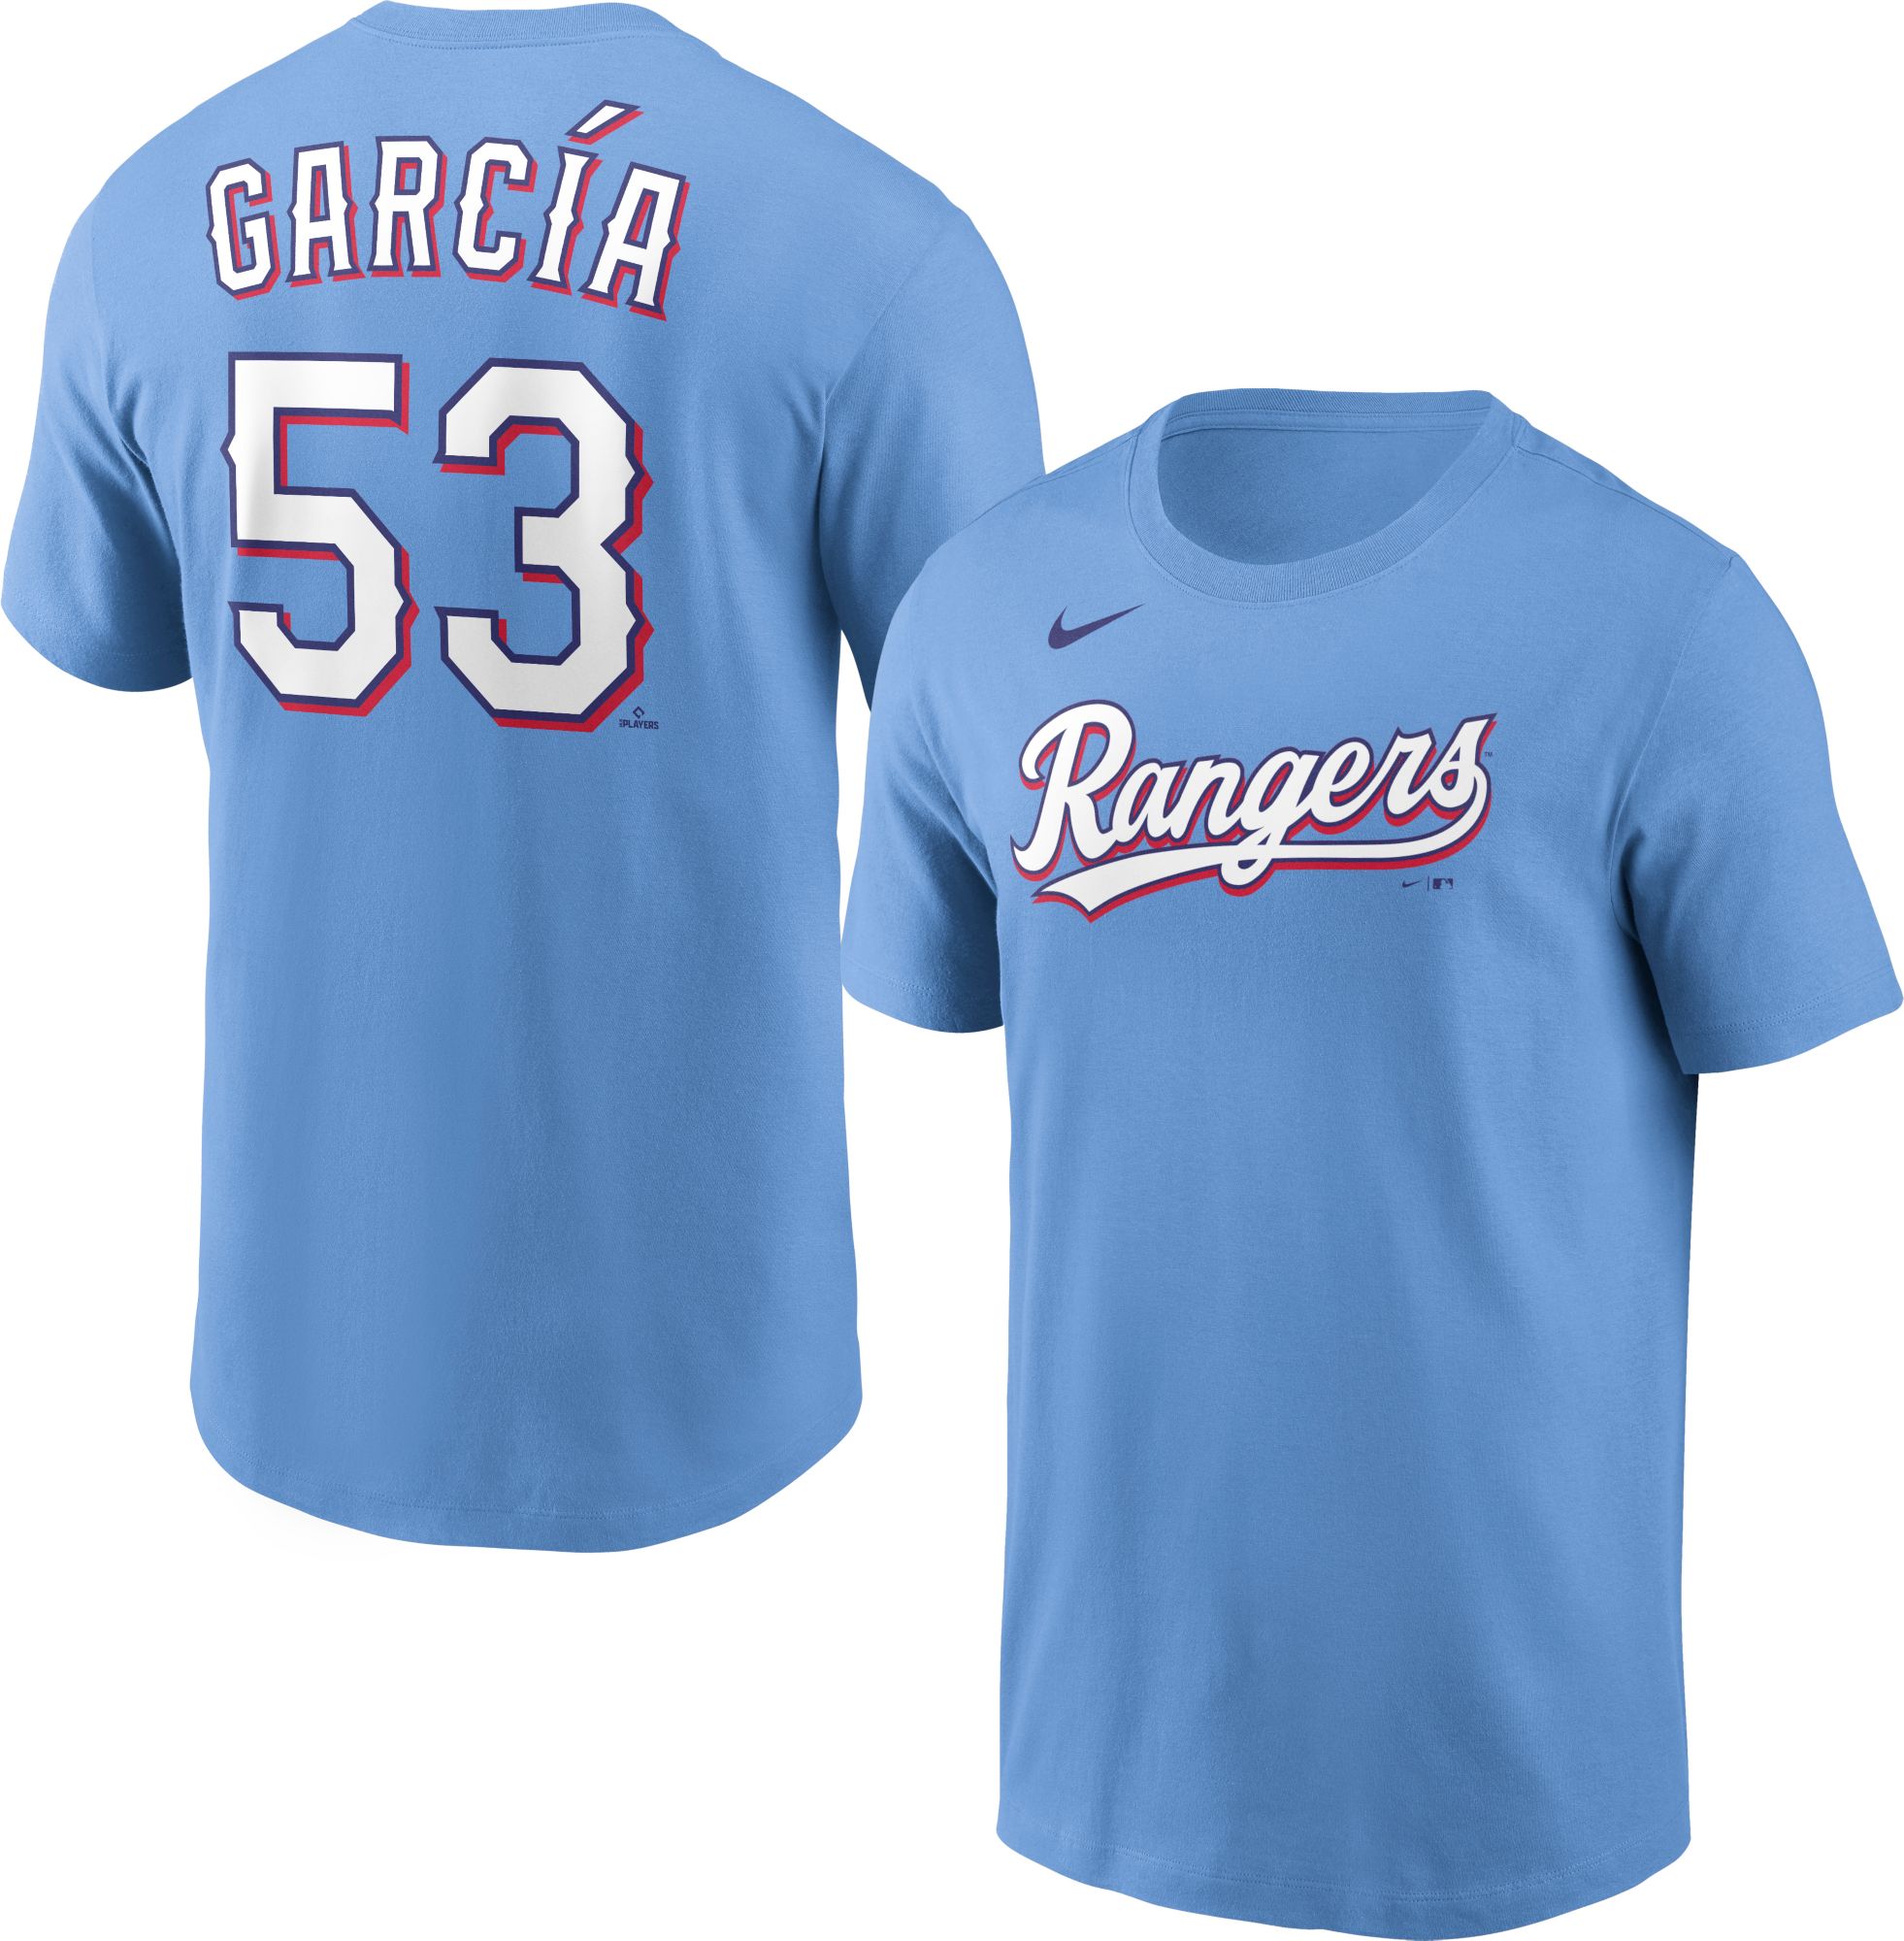 Nike Youth Texas Rangers Adolis García #53 Blue Cool Base Jersey